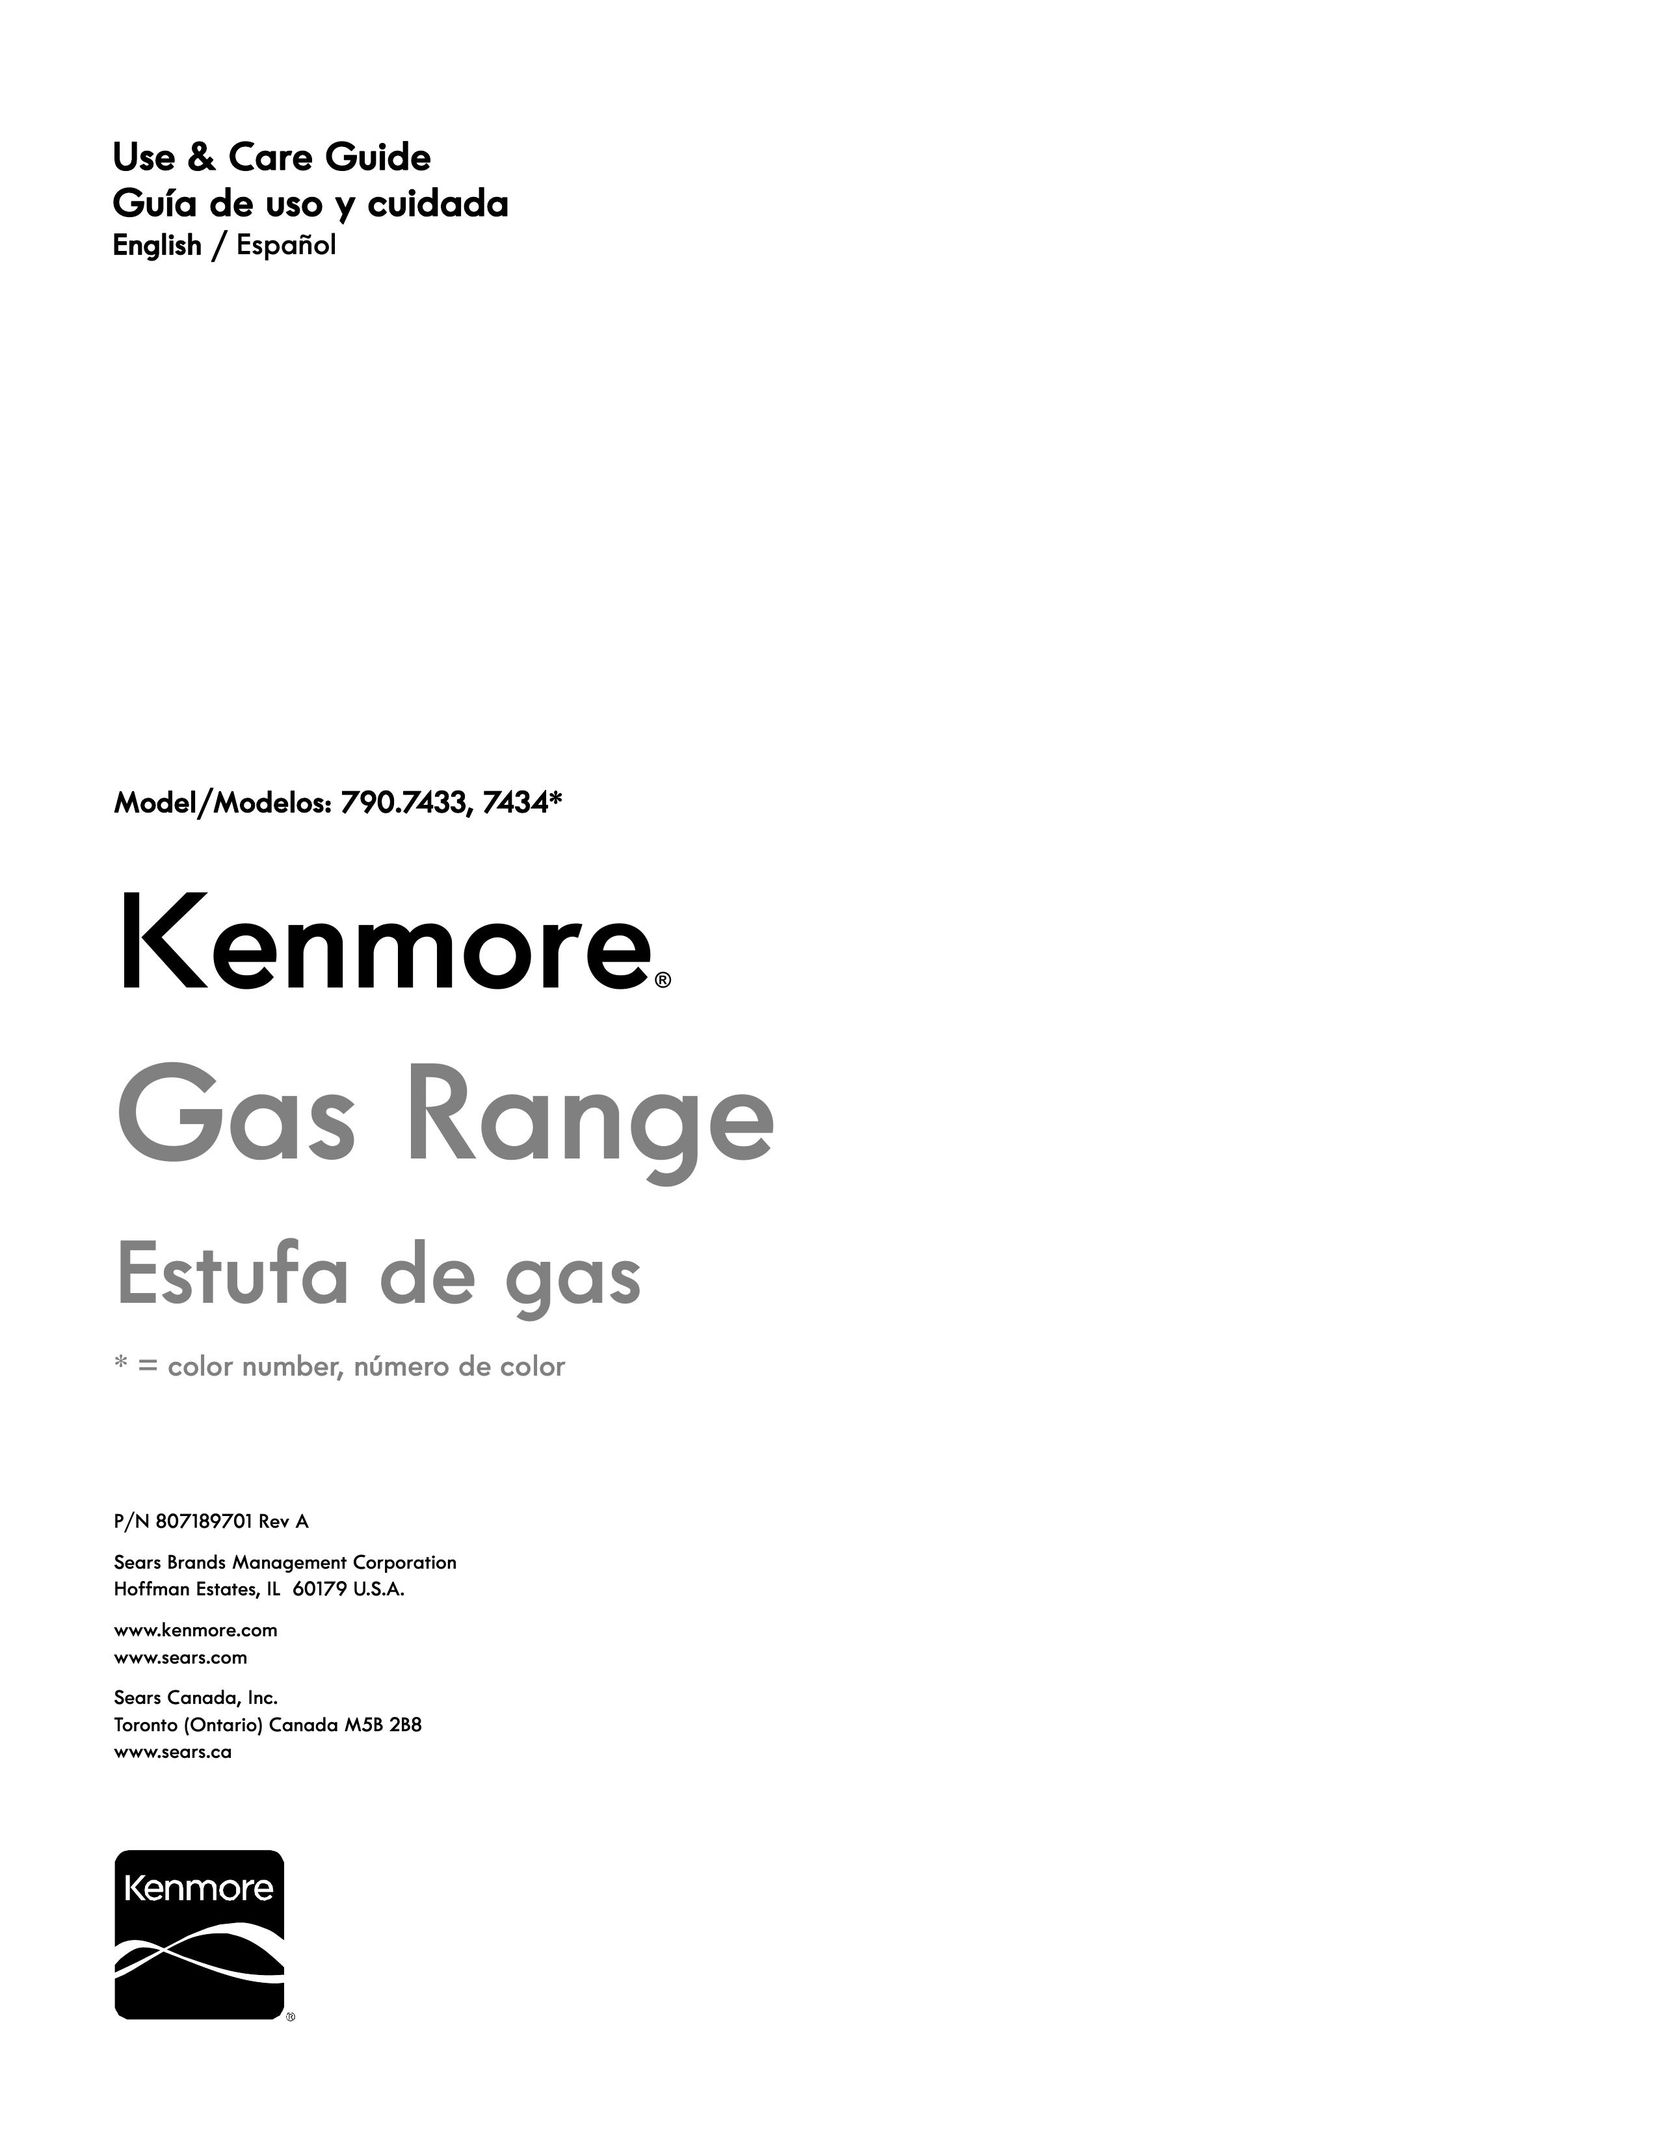 Kenmore 7434 Range User Manual